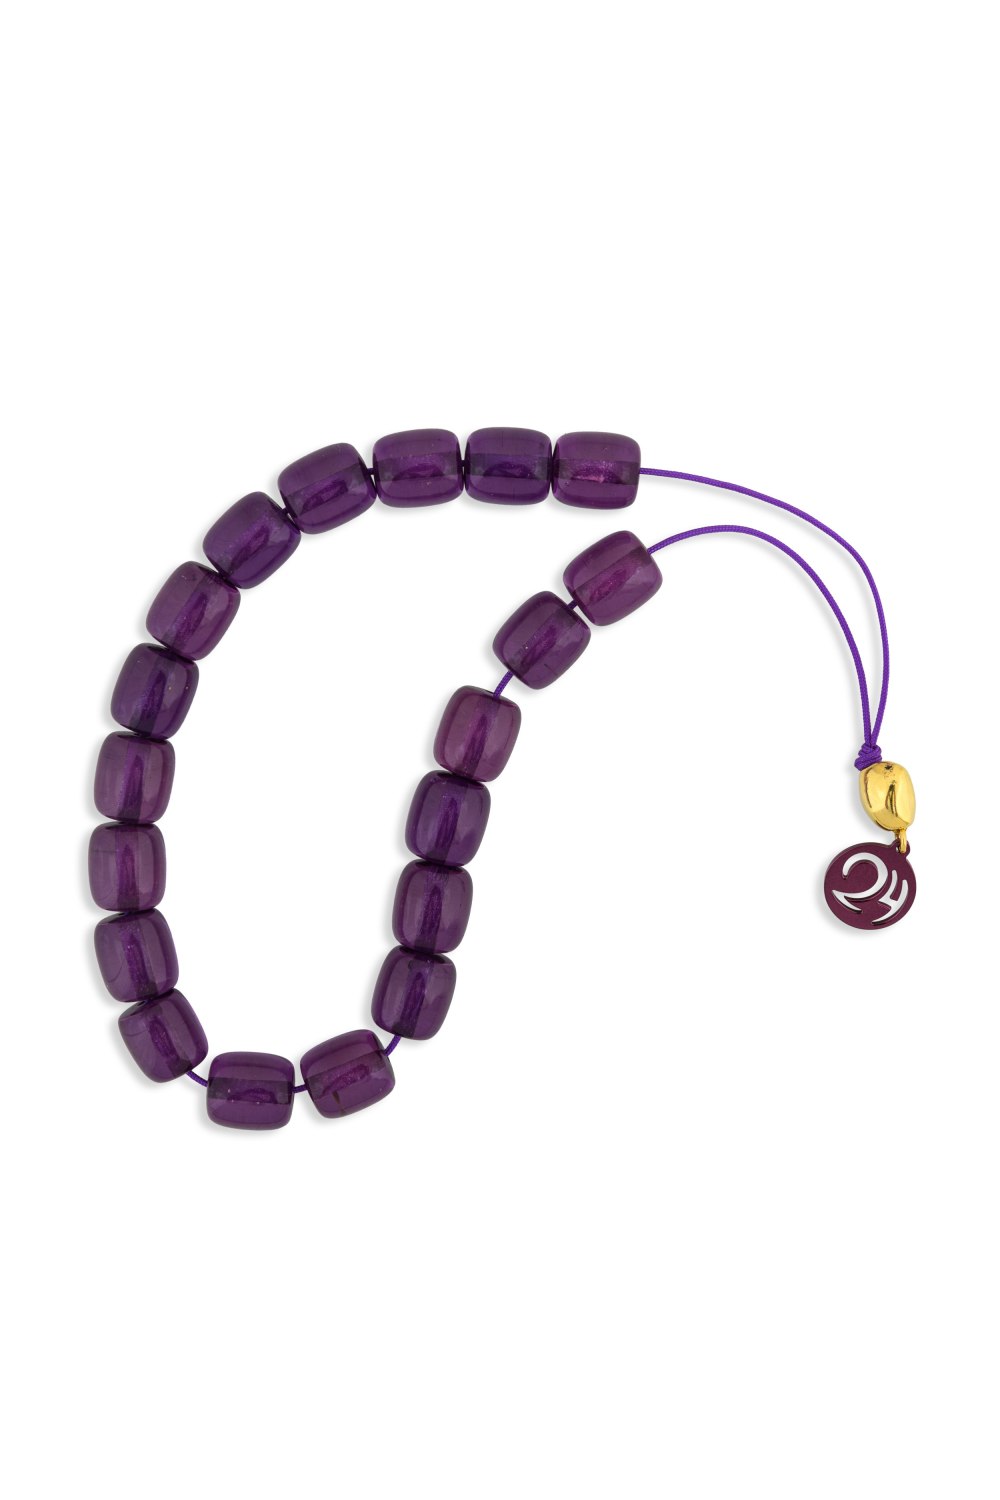 KESSARIS - Lucky Charm 24 Violet Purple Resin Komboloi